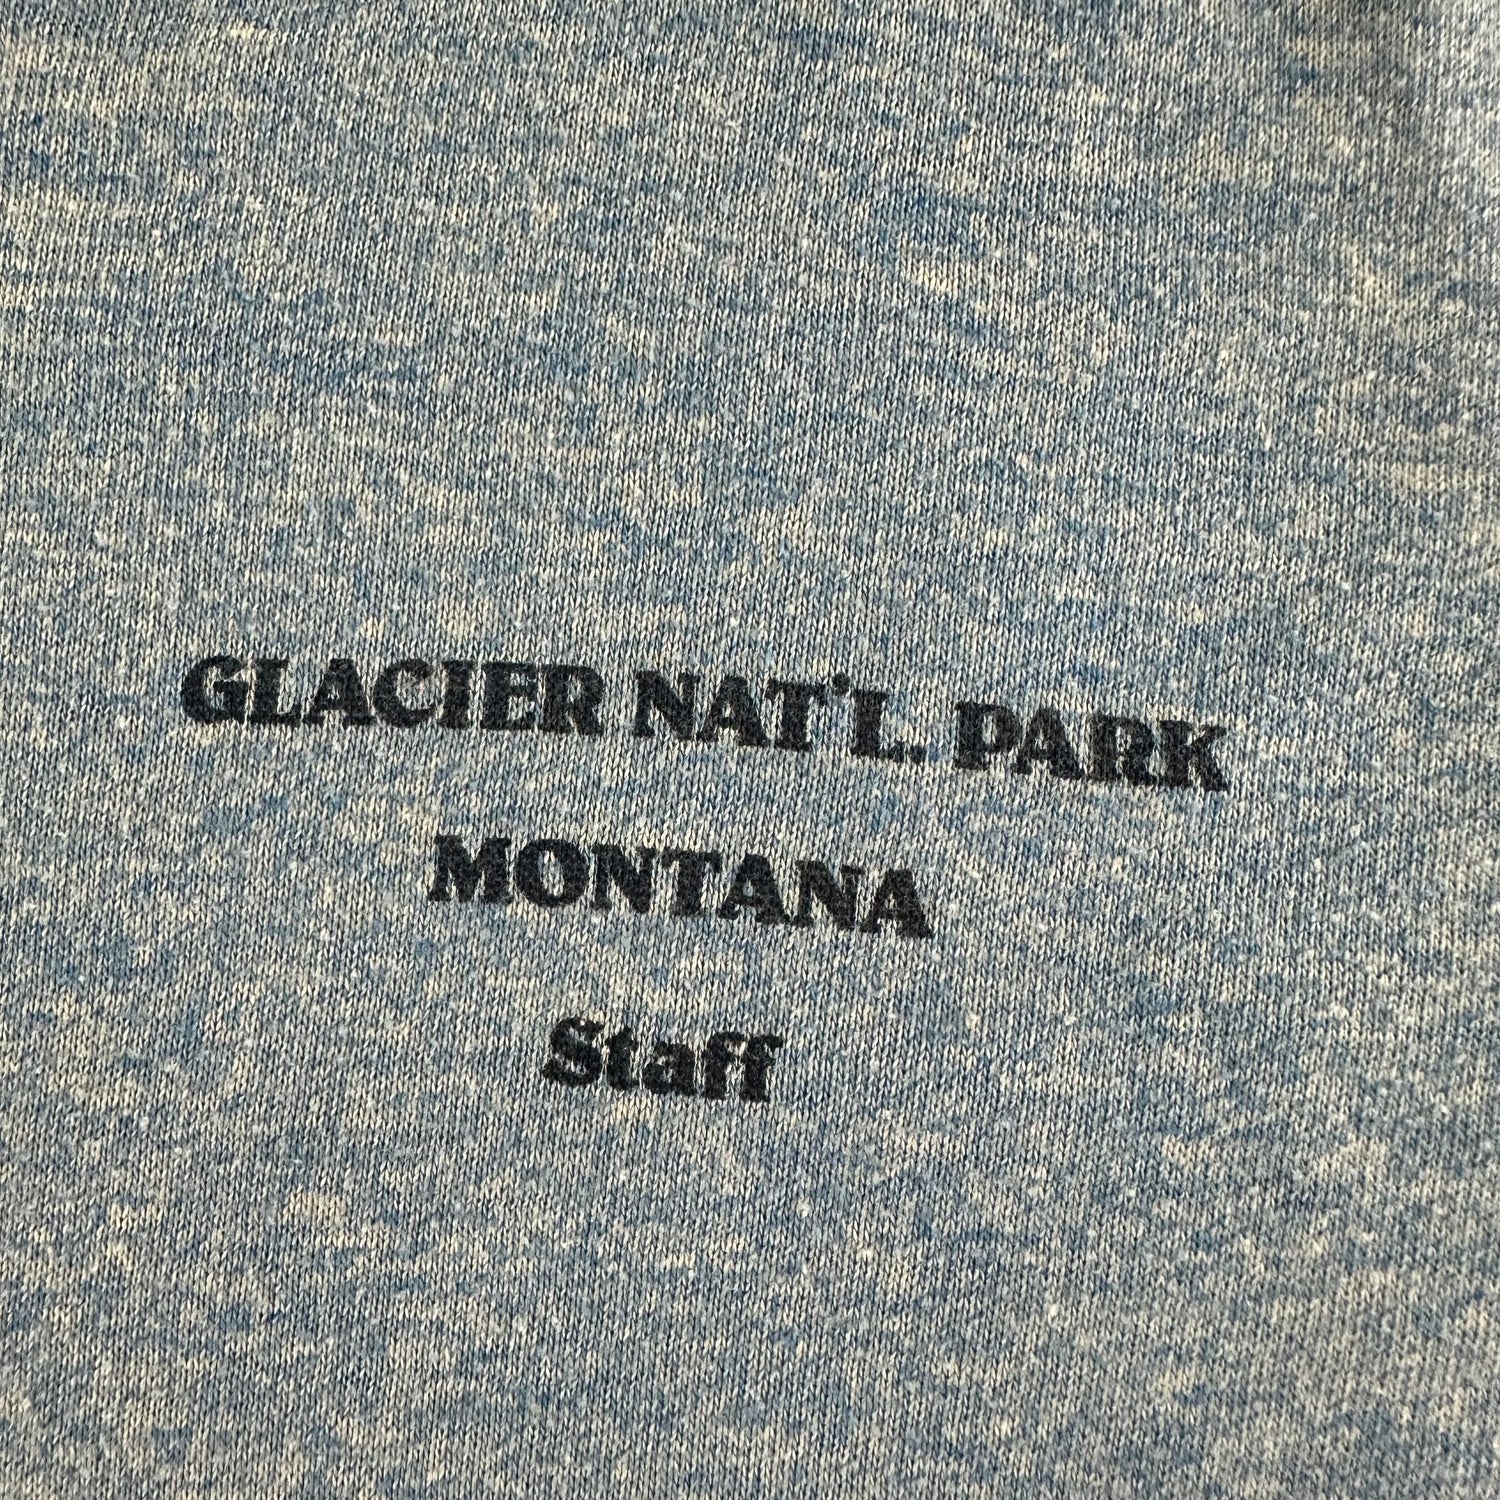 Vintage 1980s Glacier National Park T-shirt size Medium